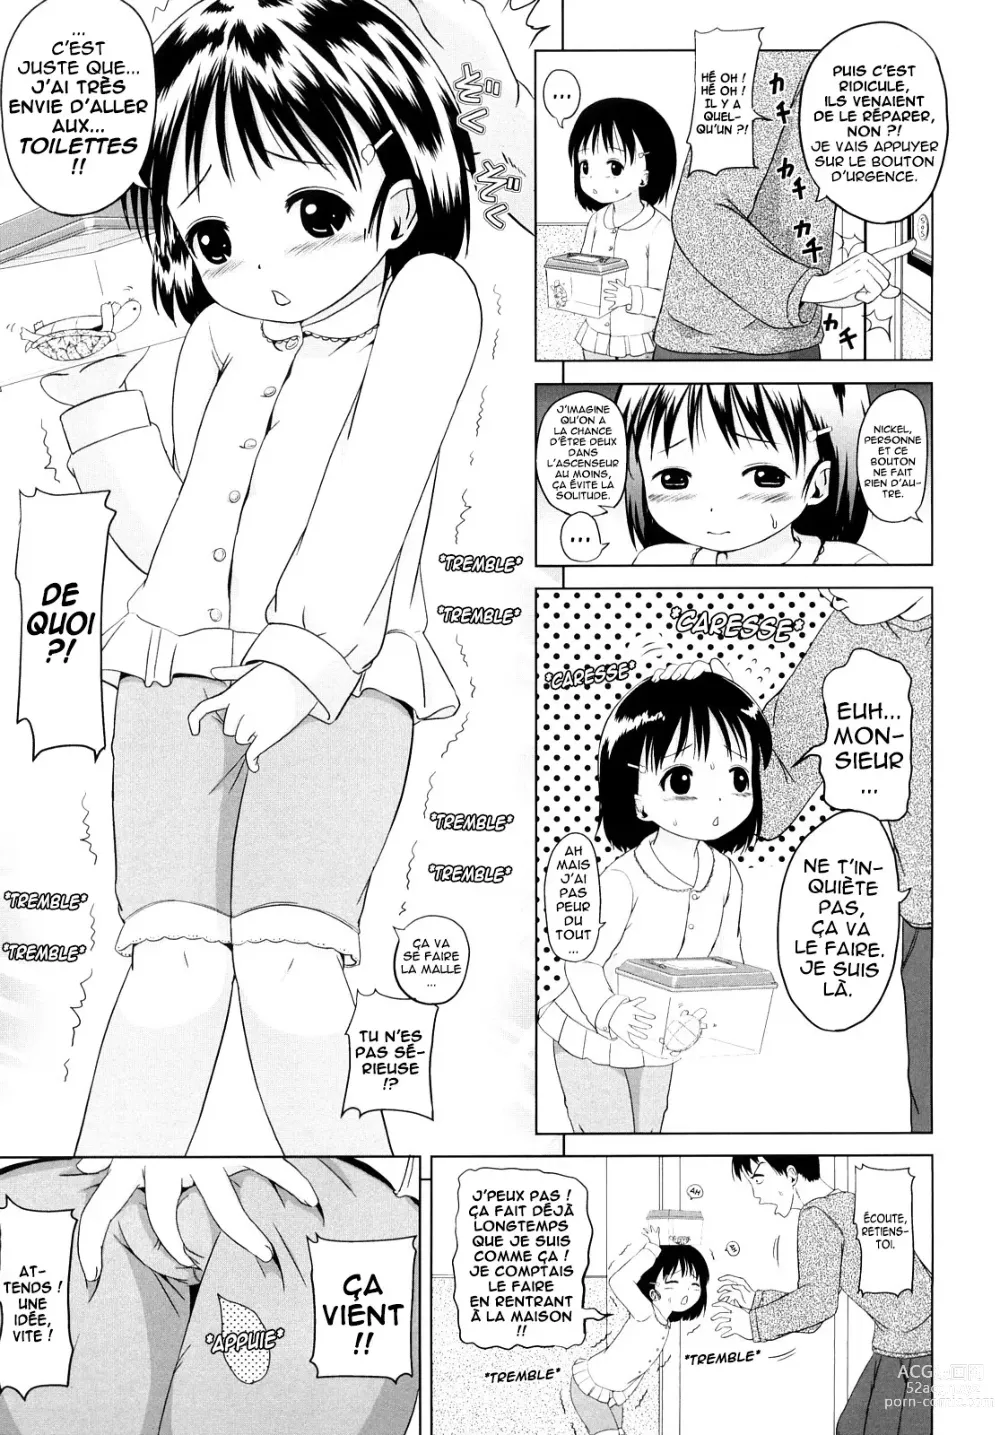 Page 3 of manga Elevator Action